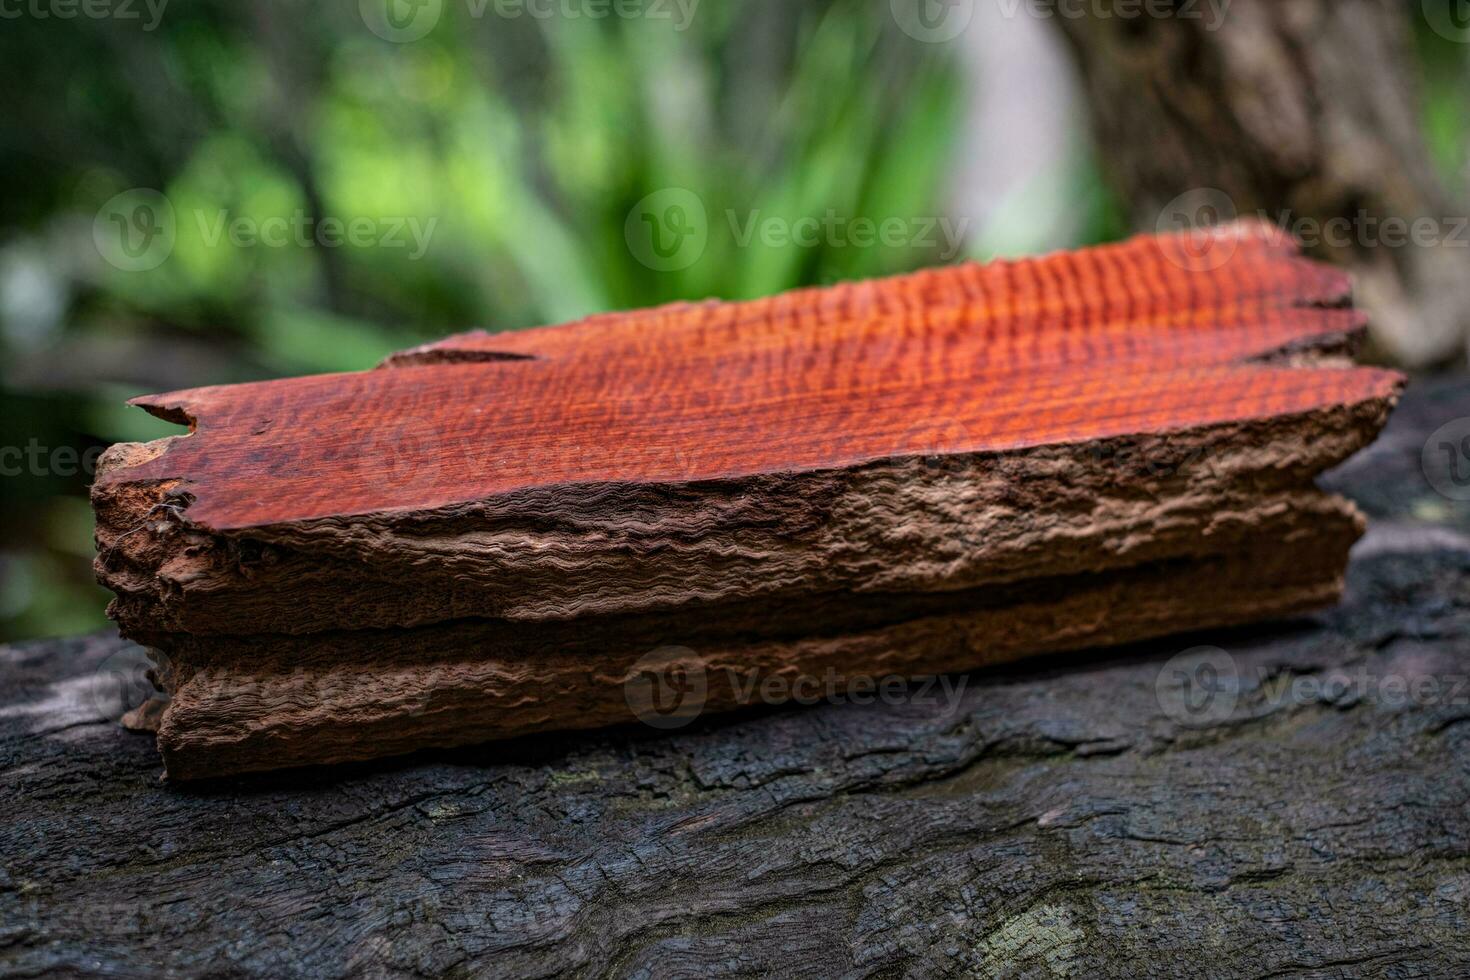 la madera tiene una veta de raya de tigre o raya rizada, foto